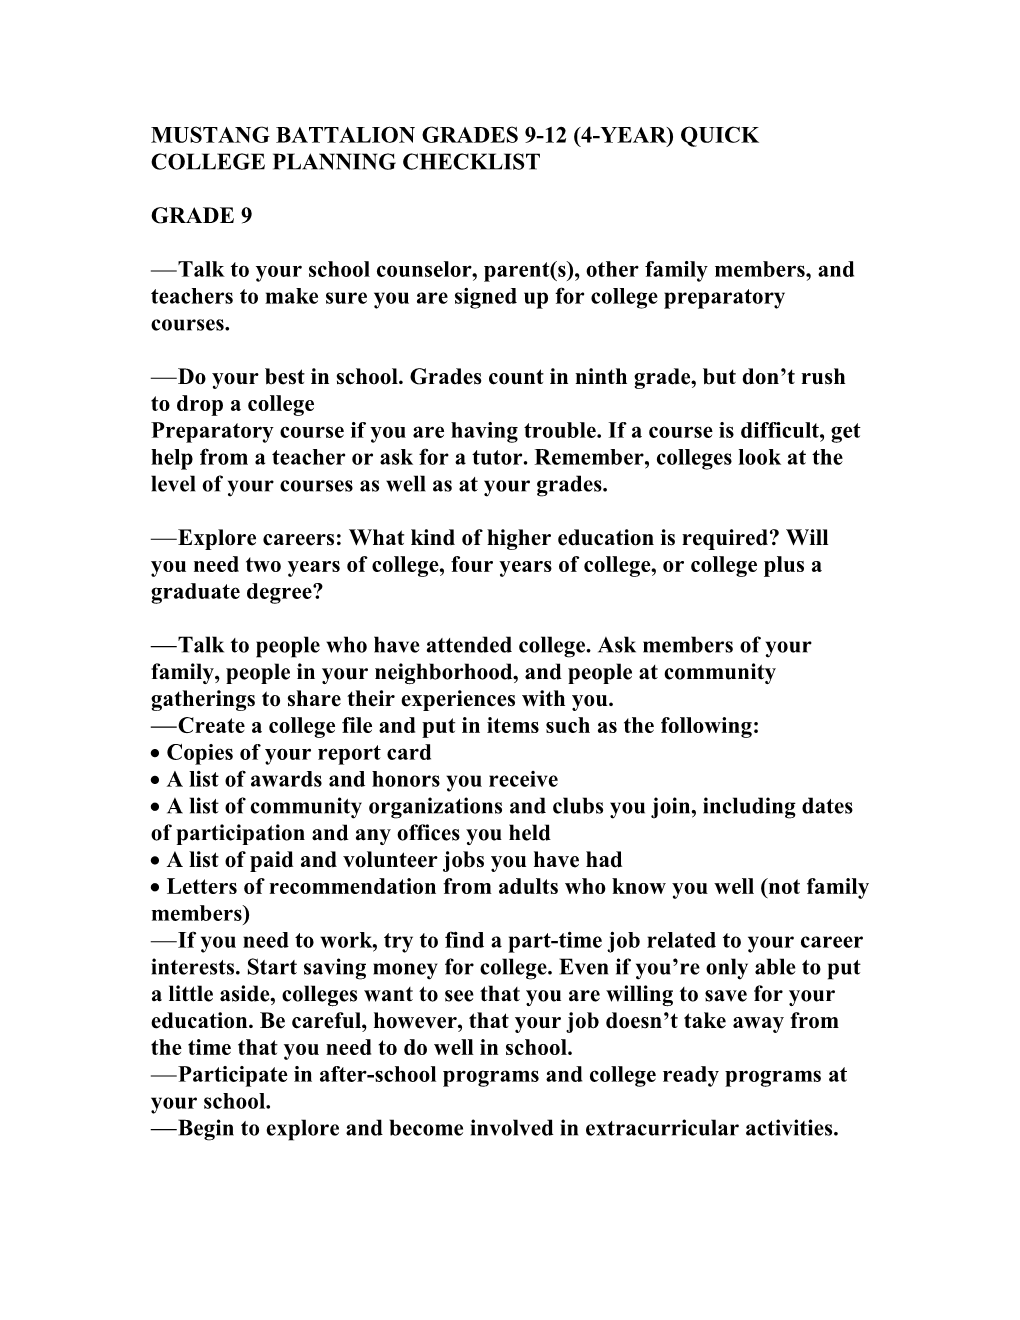 Mustang Battalion Grades 9-12 (4-Year) Quick College Planning Checklist